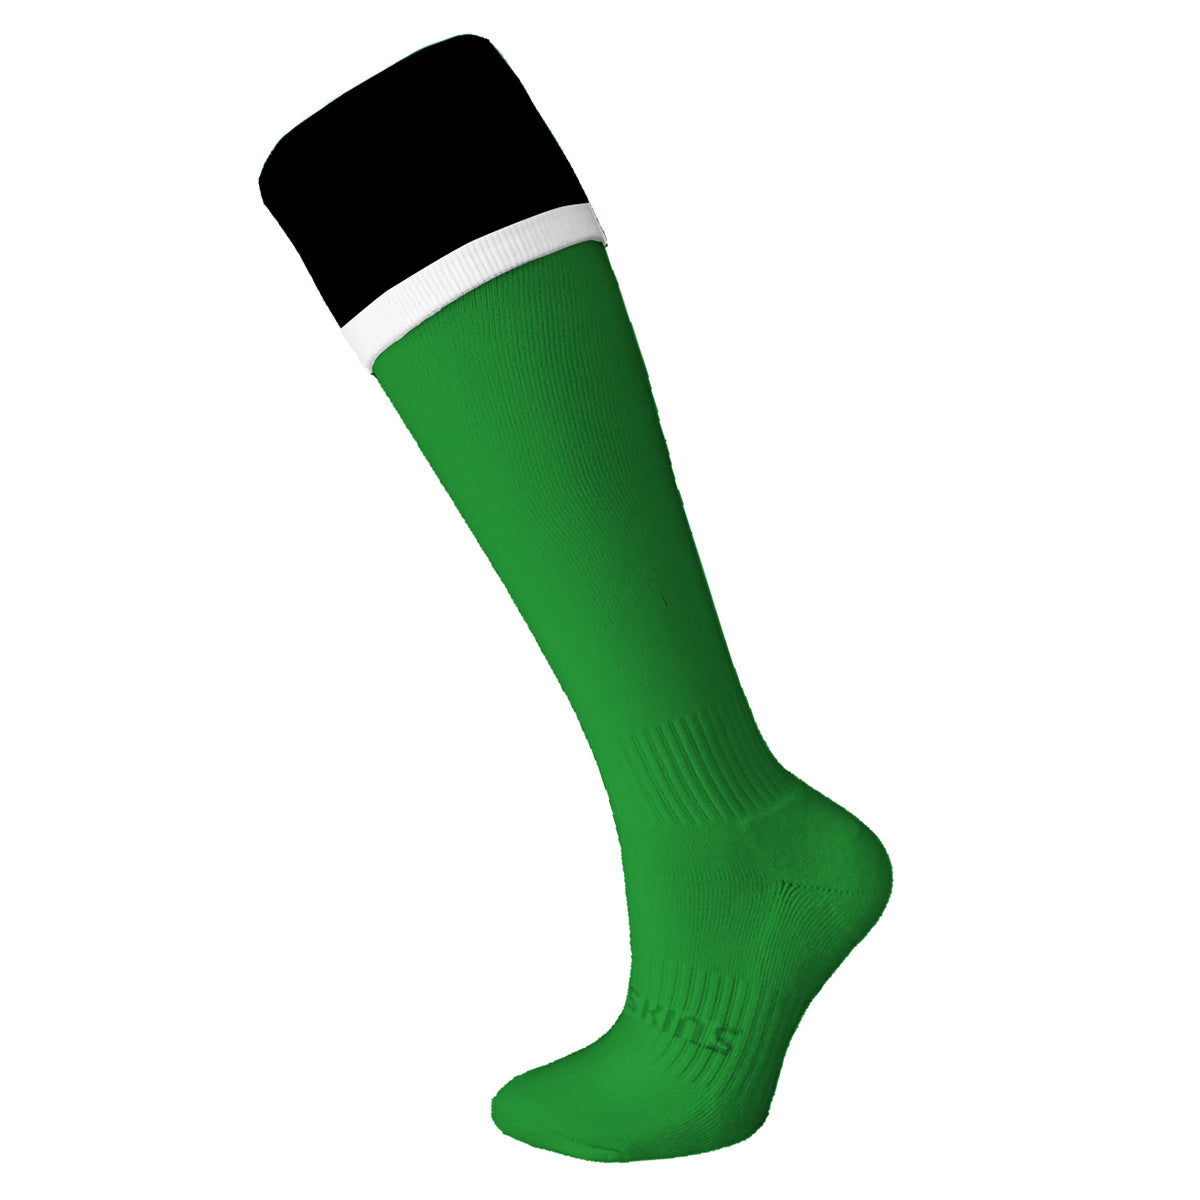 Hockey Socks Grass Green Black/White Top